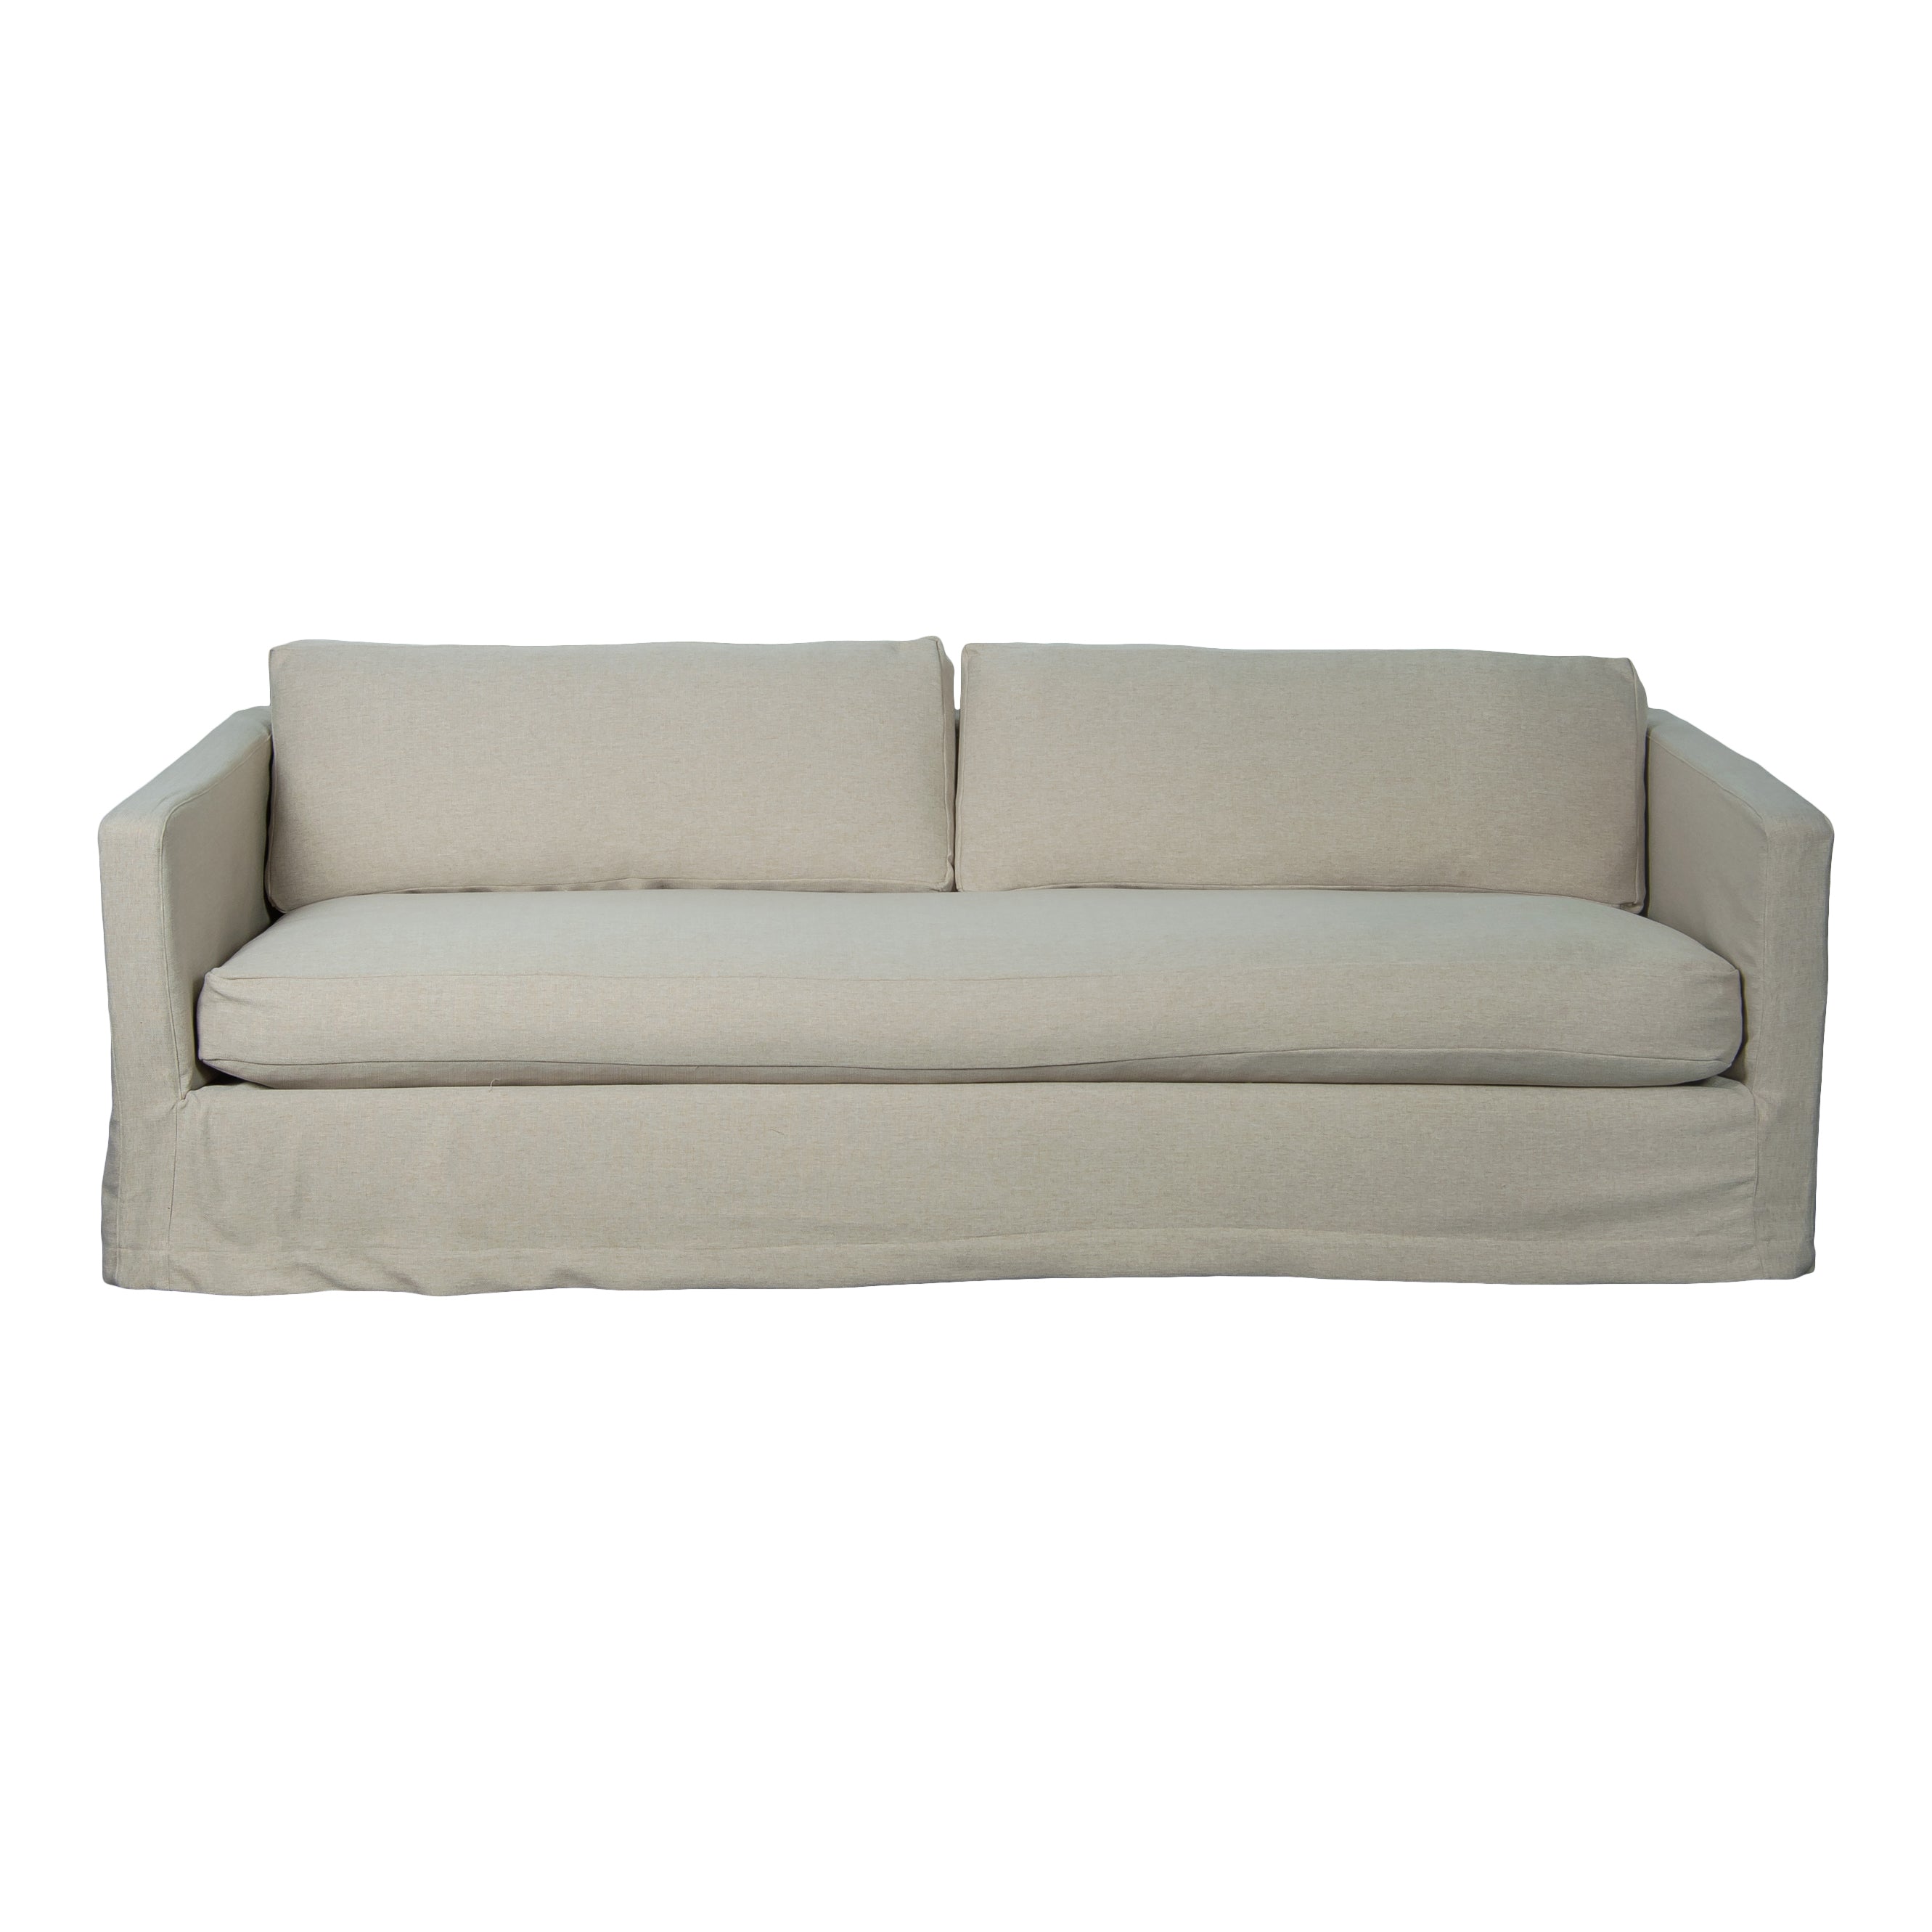 Quail Couch